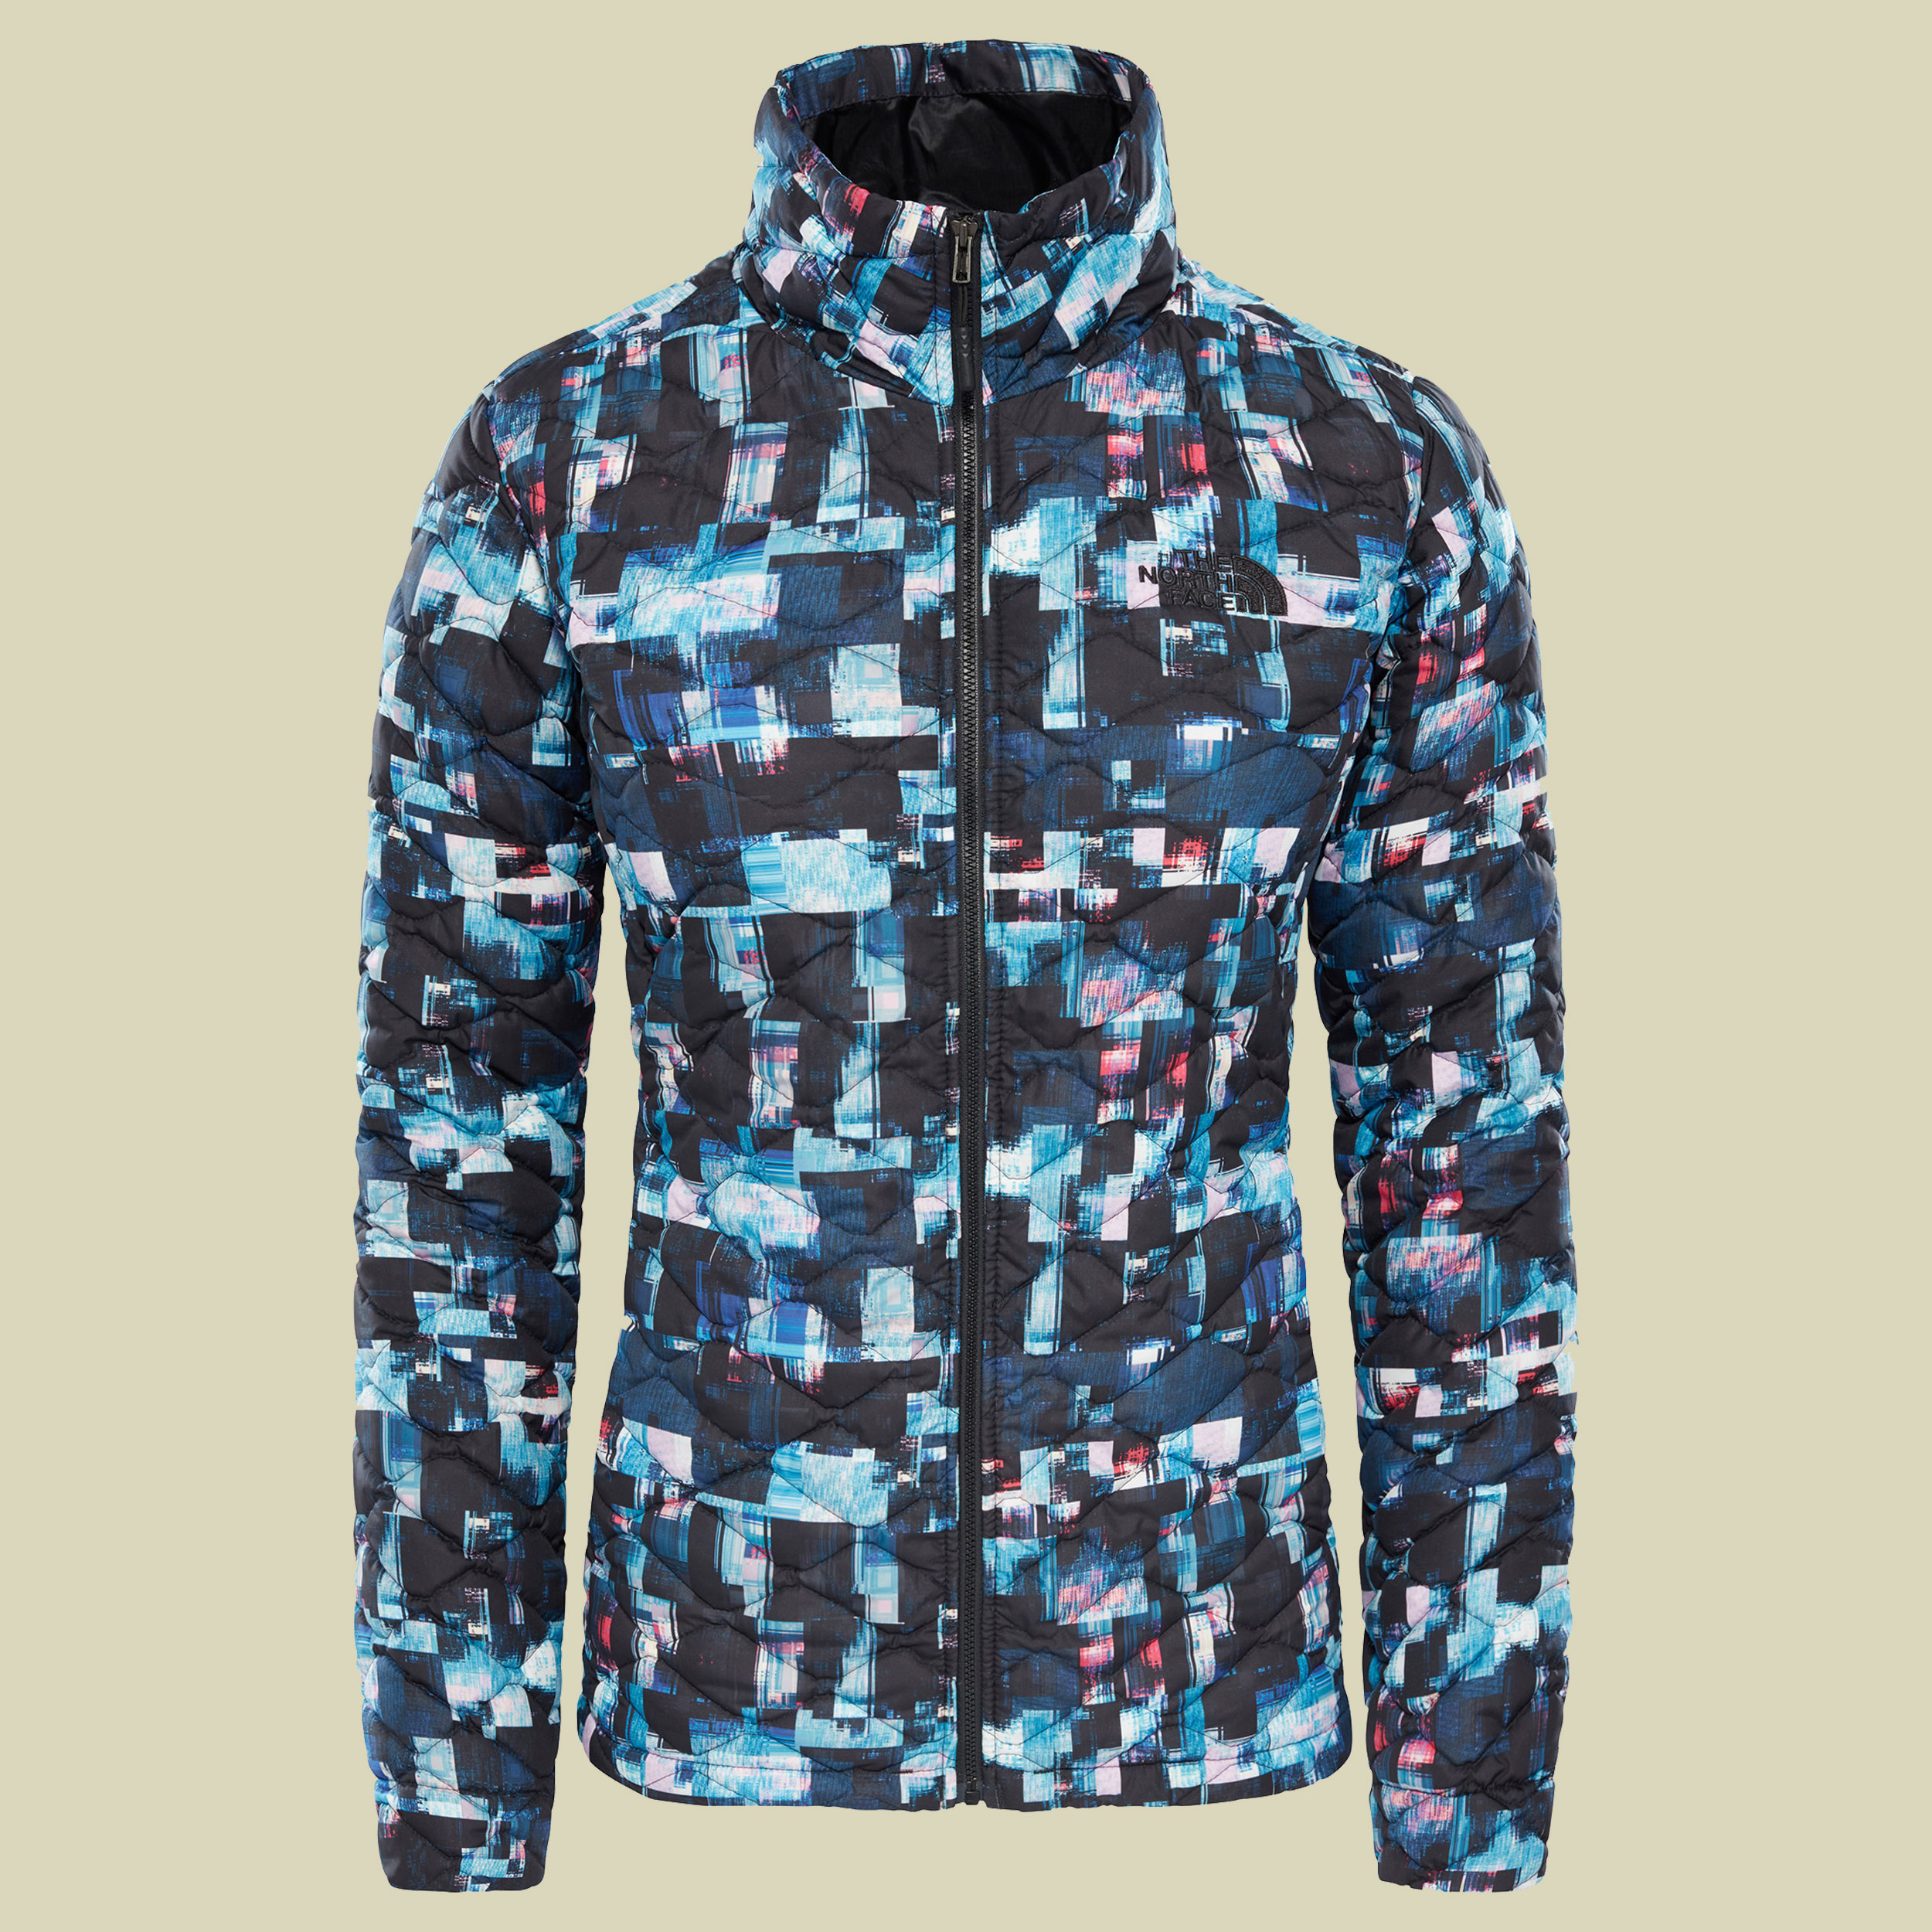 Thermoball Jacket Women Größe S Farbe multi glitch print